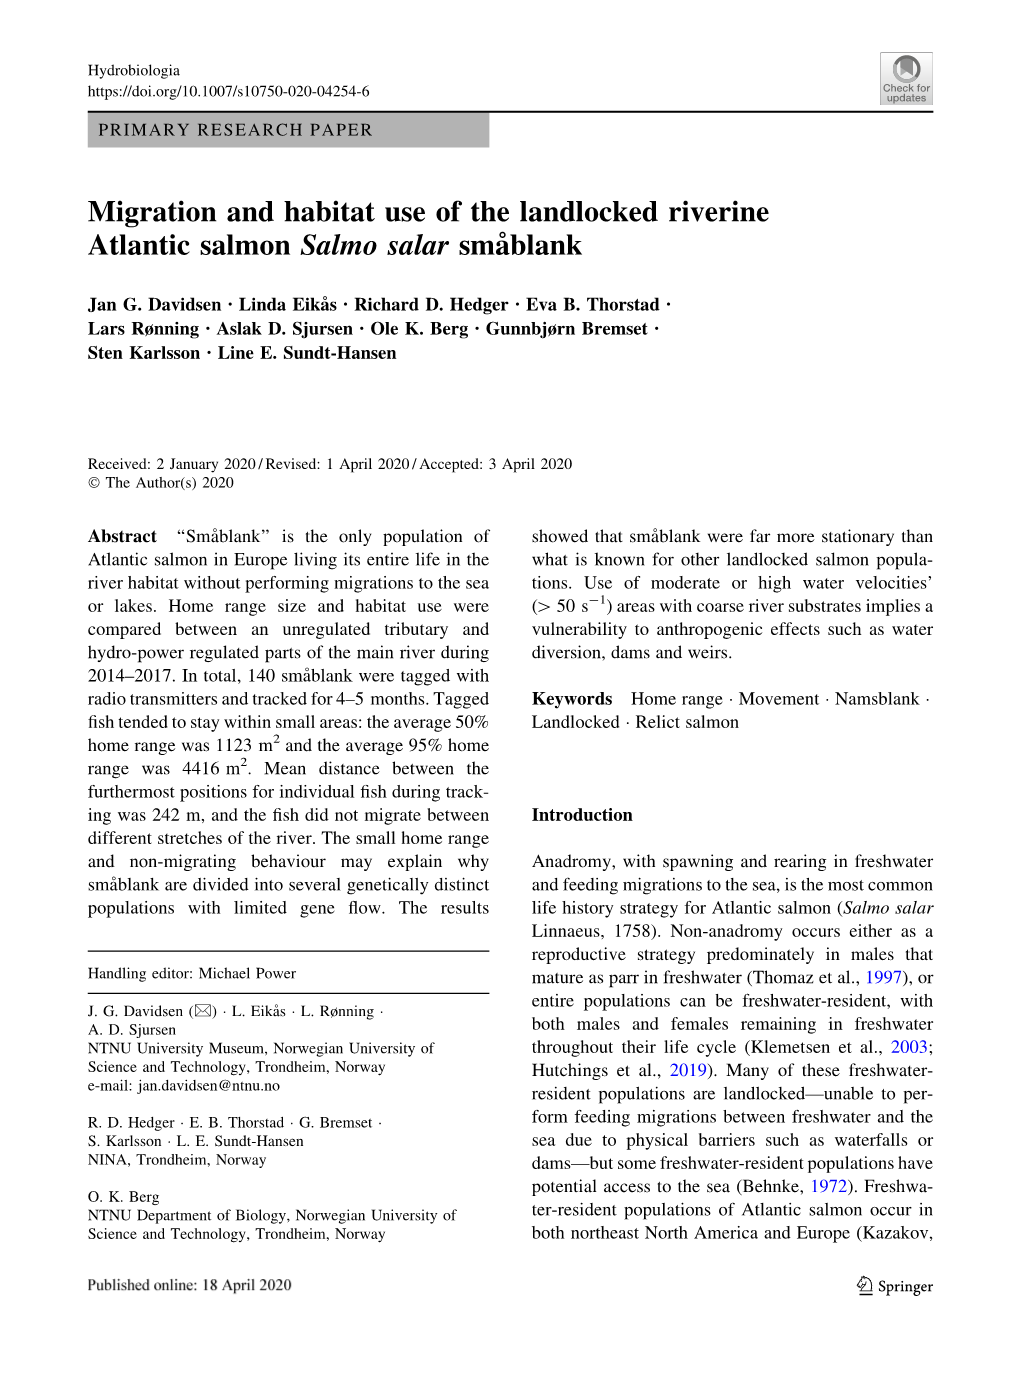 Migration and Habitat Use of the Landlocked Riverine Atlantic Salmon Salmo Salar Småblank